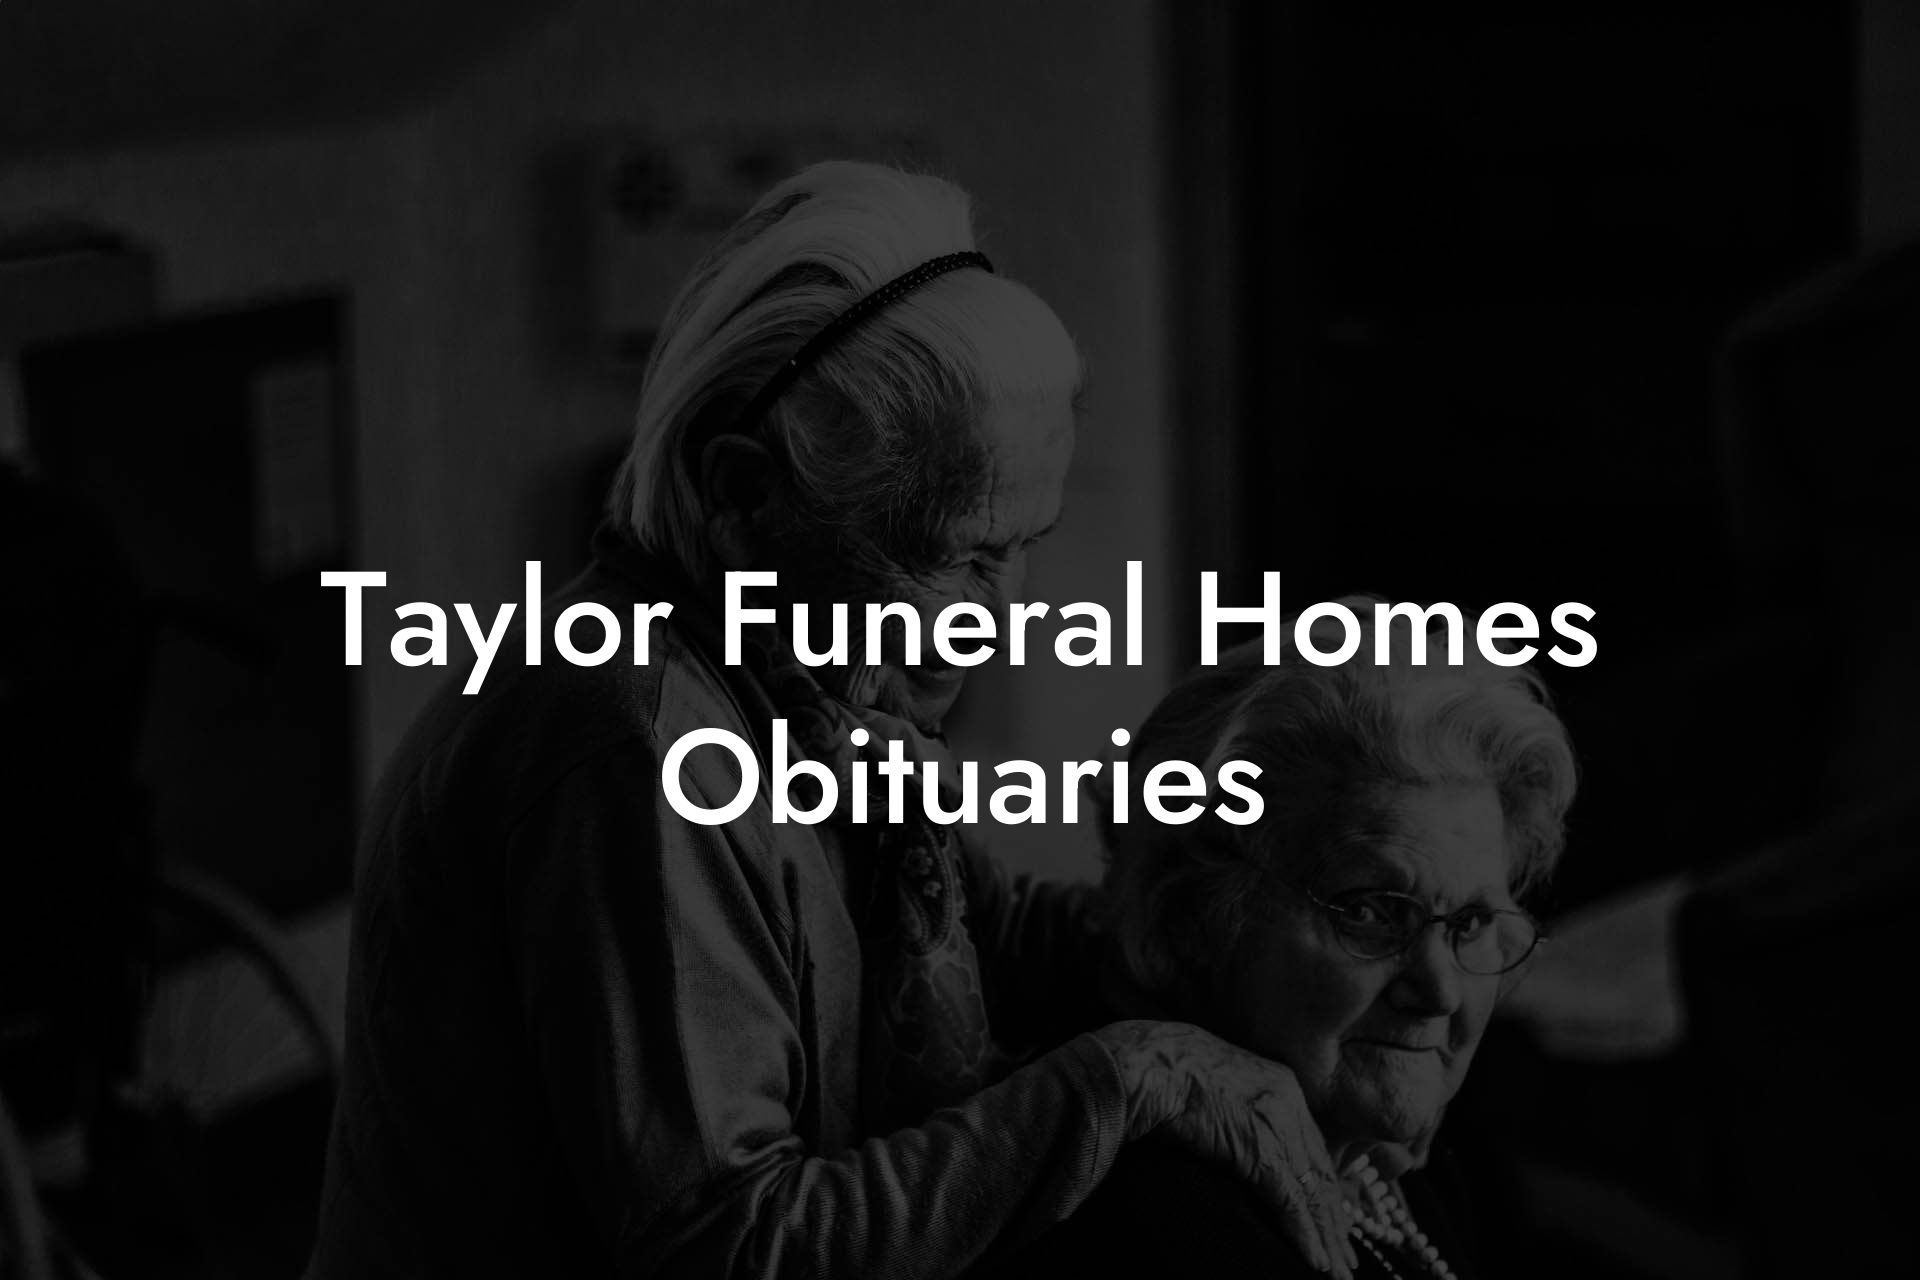 Taylor Funeral Homes Obituaries